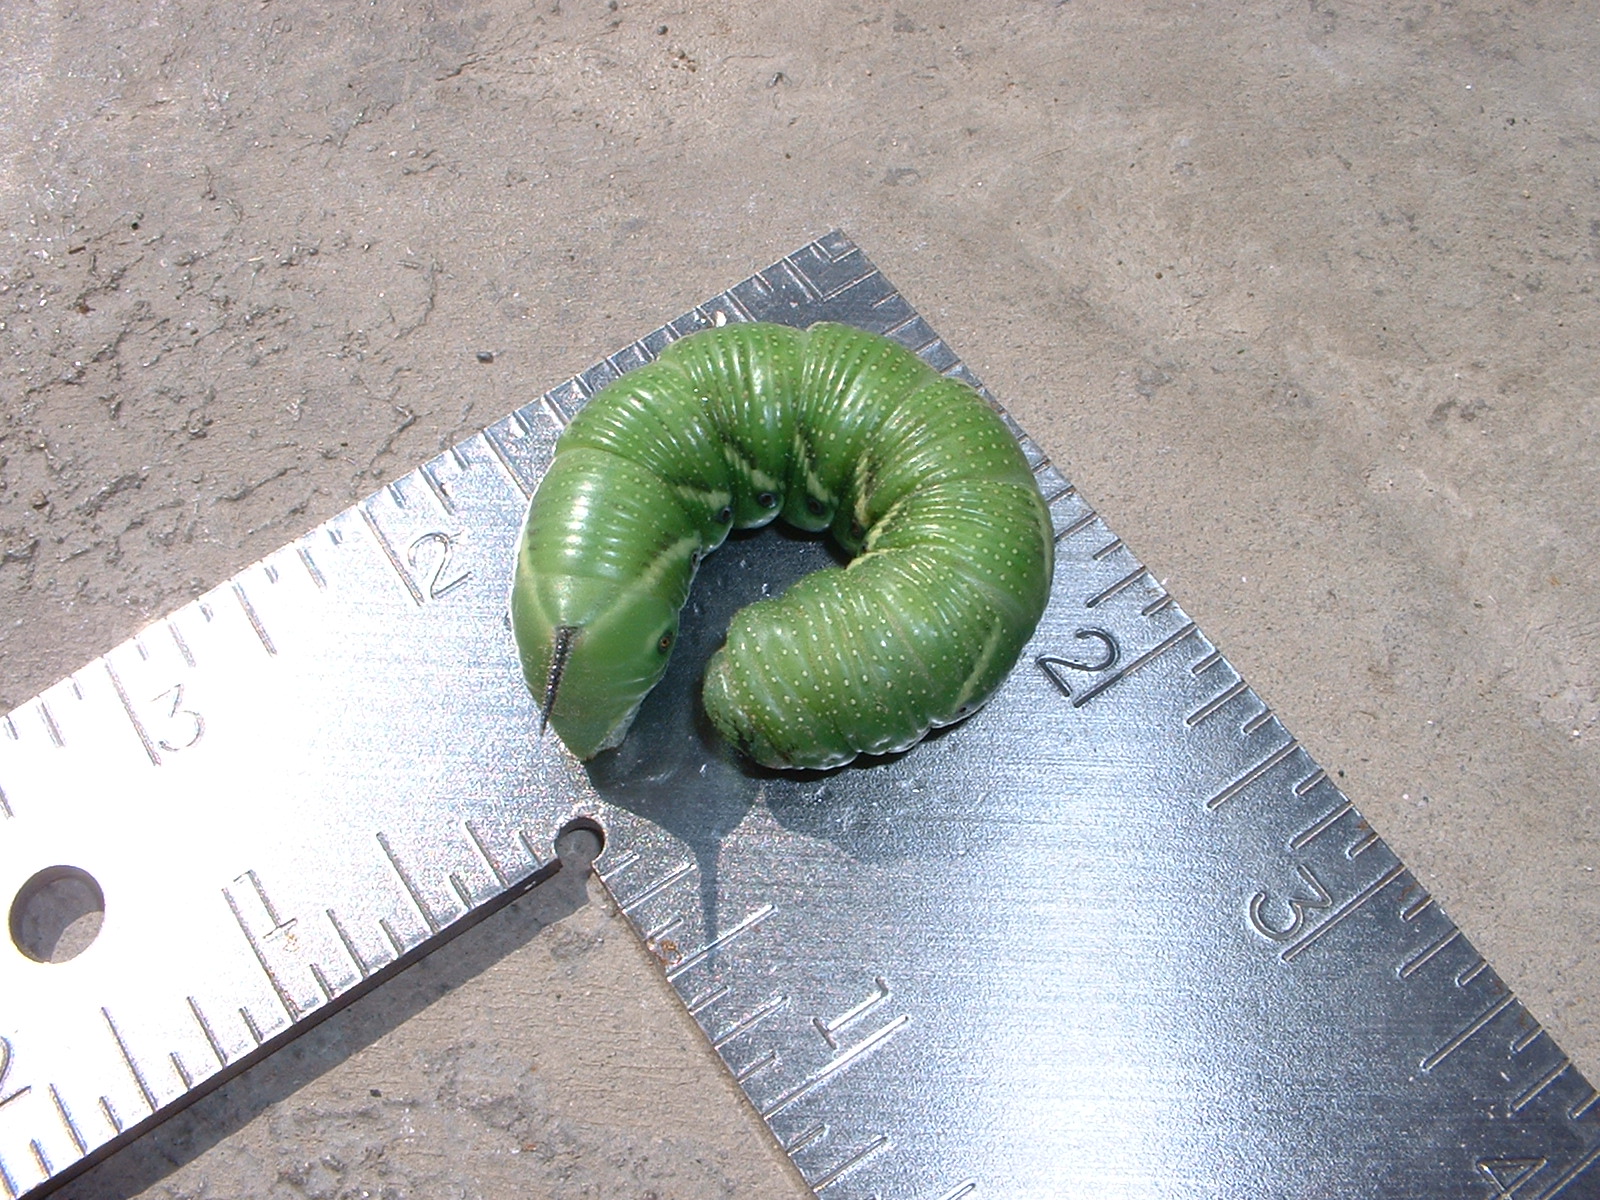 Big Green Worm or ughhhhh, Tomato Hornworm - Our Twenty Minute